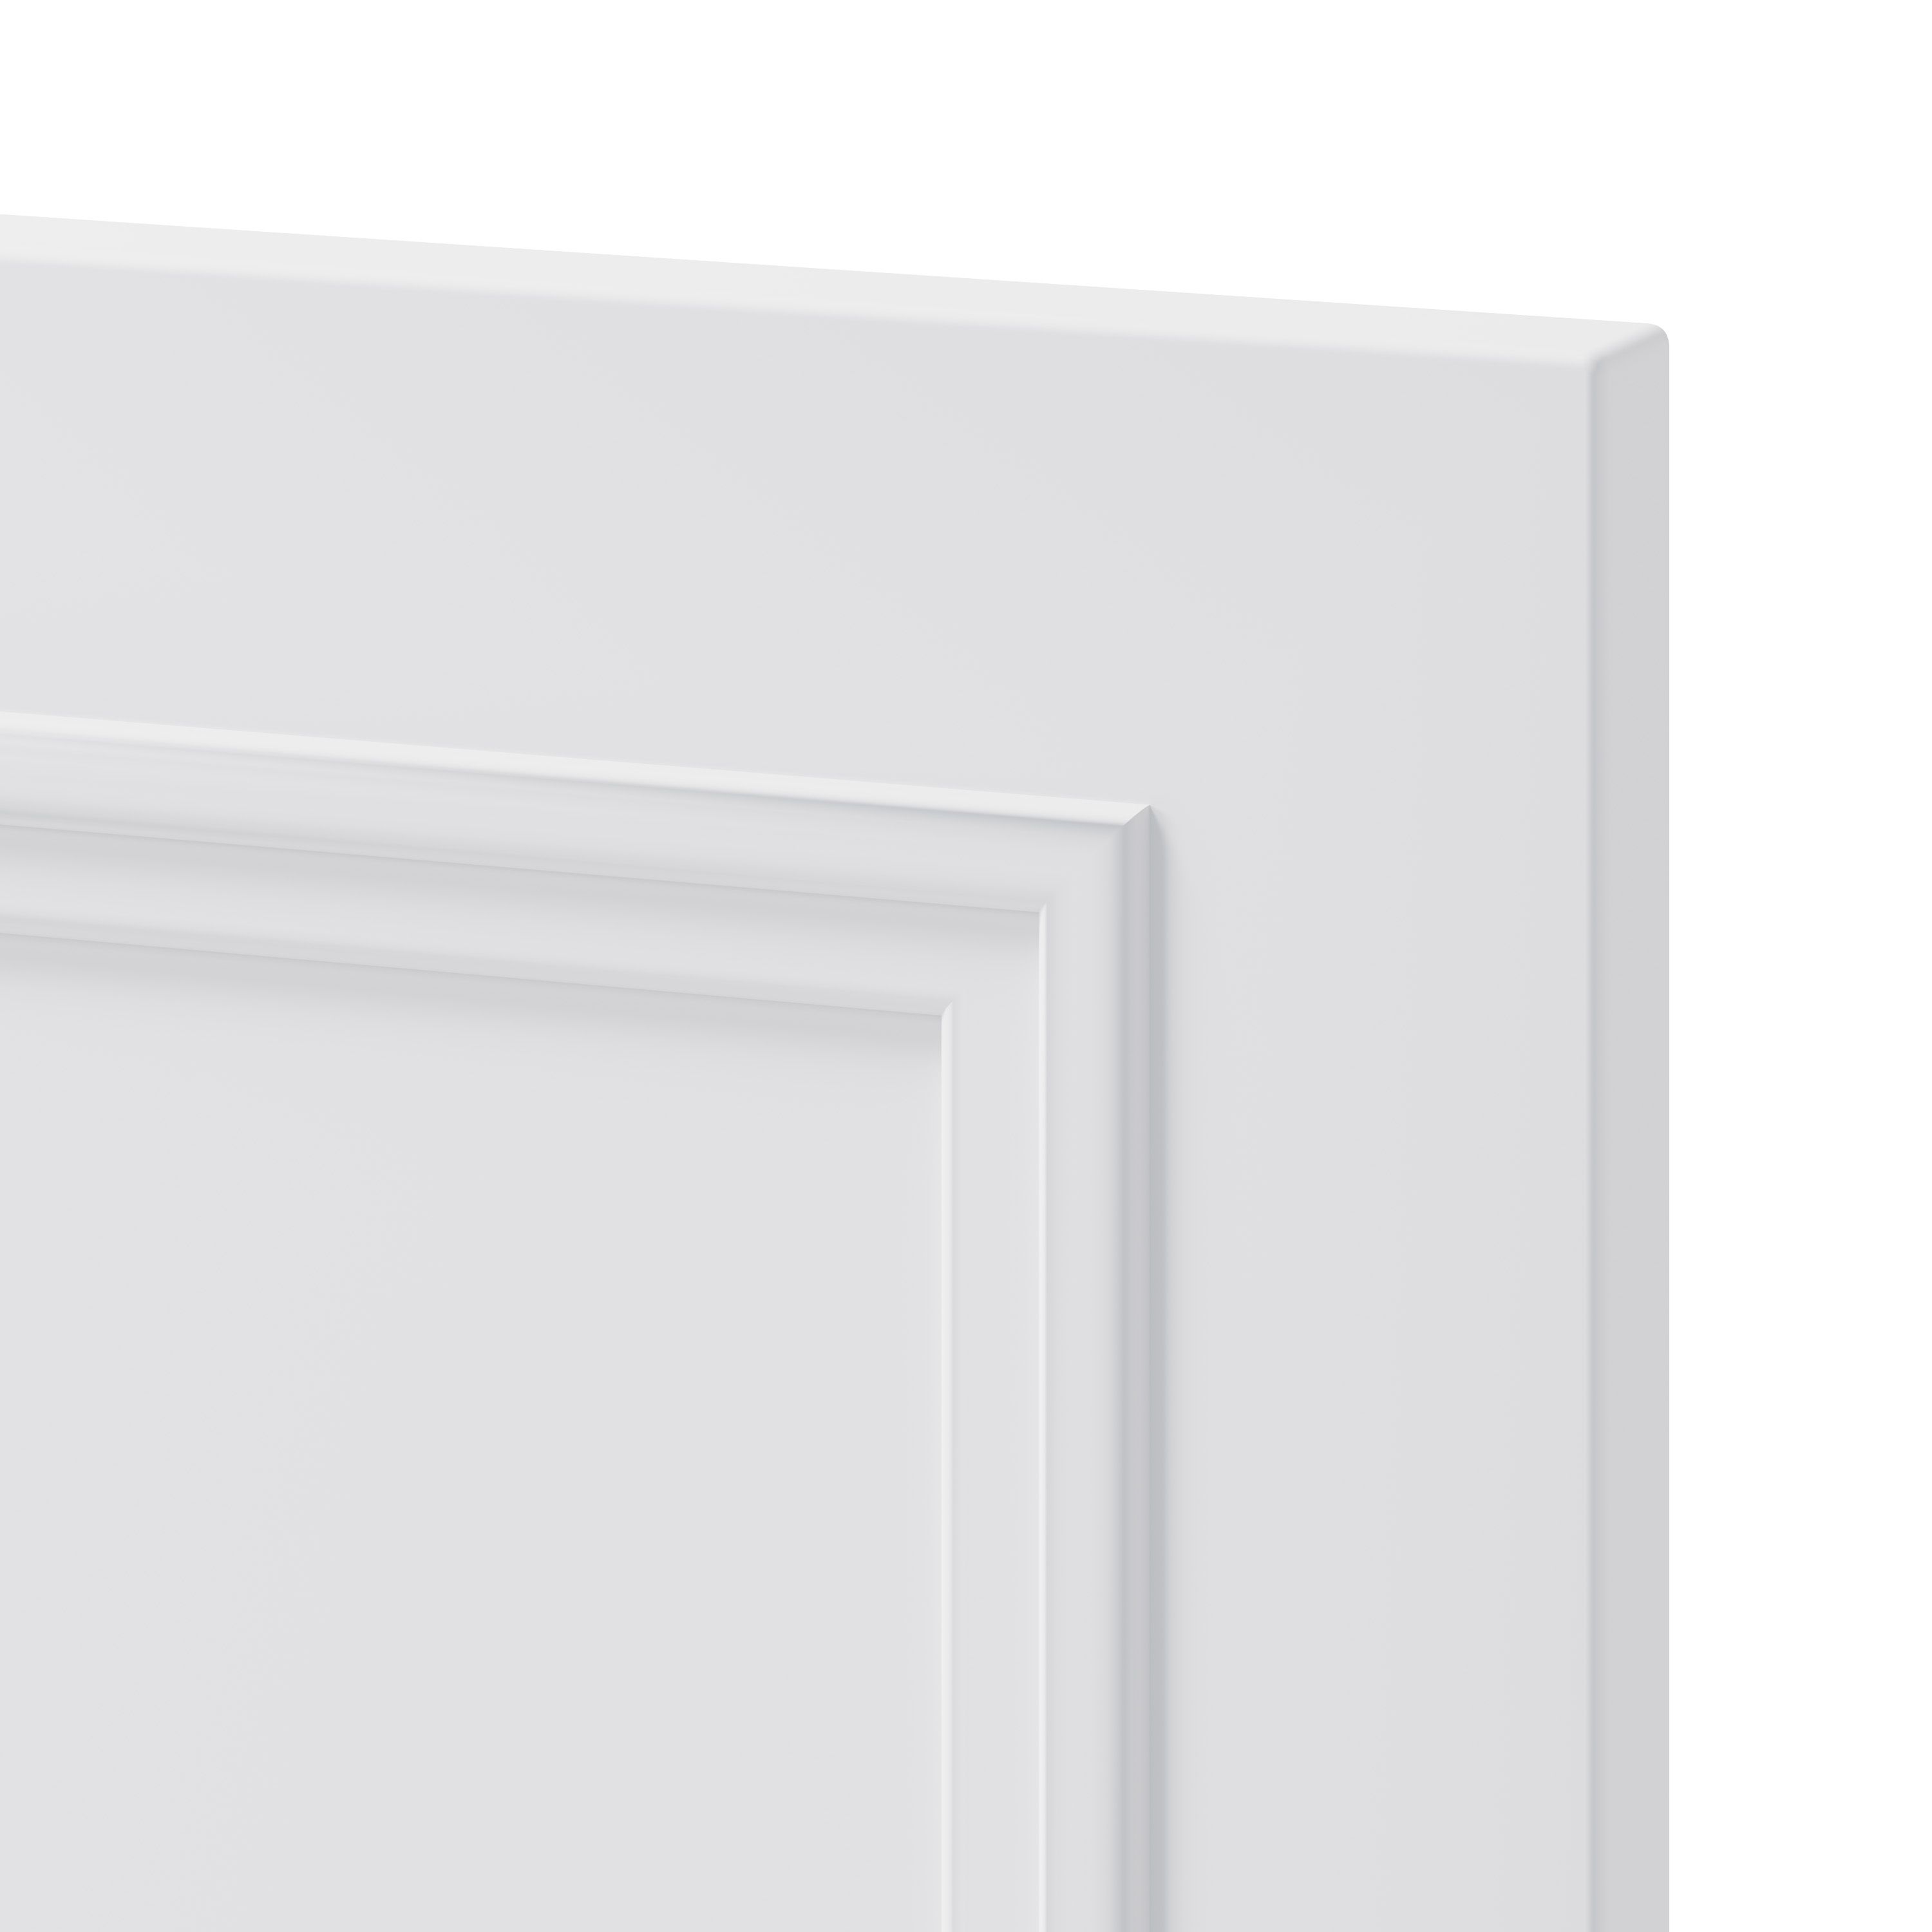 GoodHome Artemisia Matt white classic shaker moulded curve Larder Cabinet door (W)600mm (H)1181mm (T)20mm